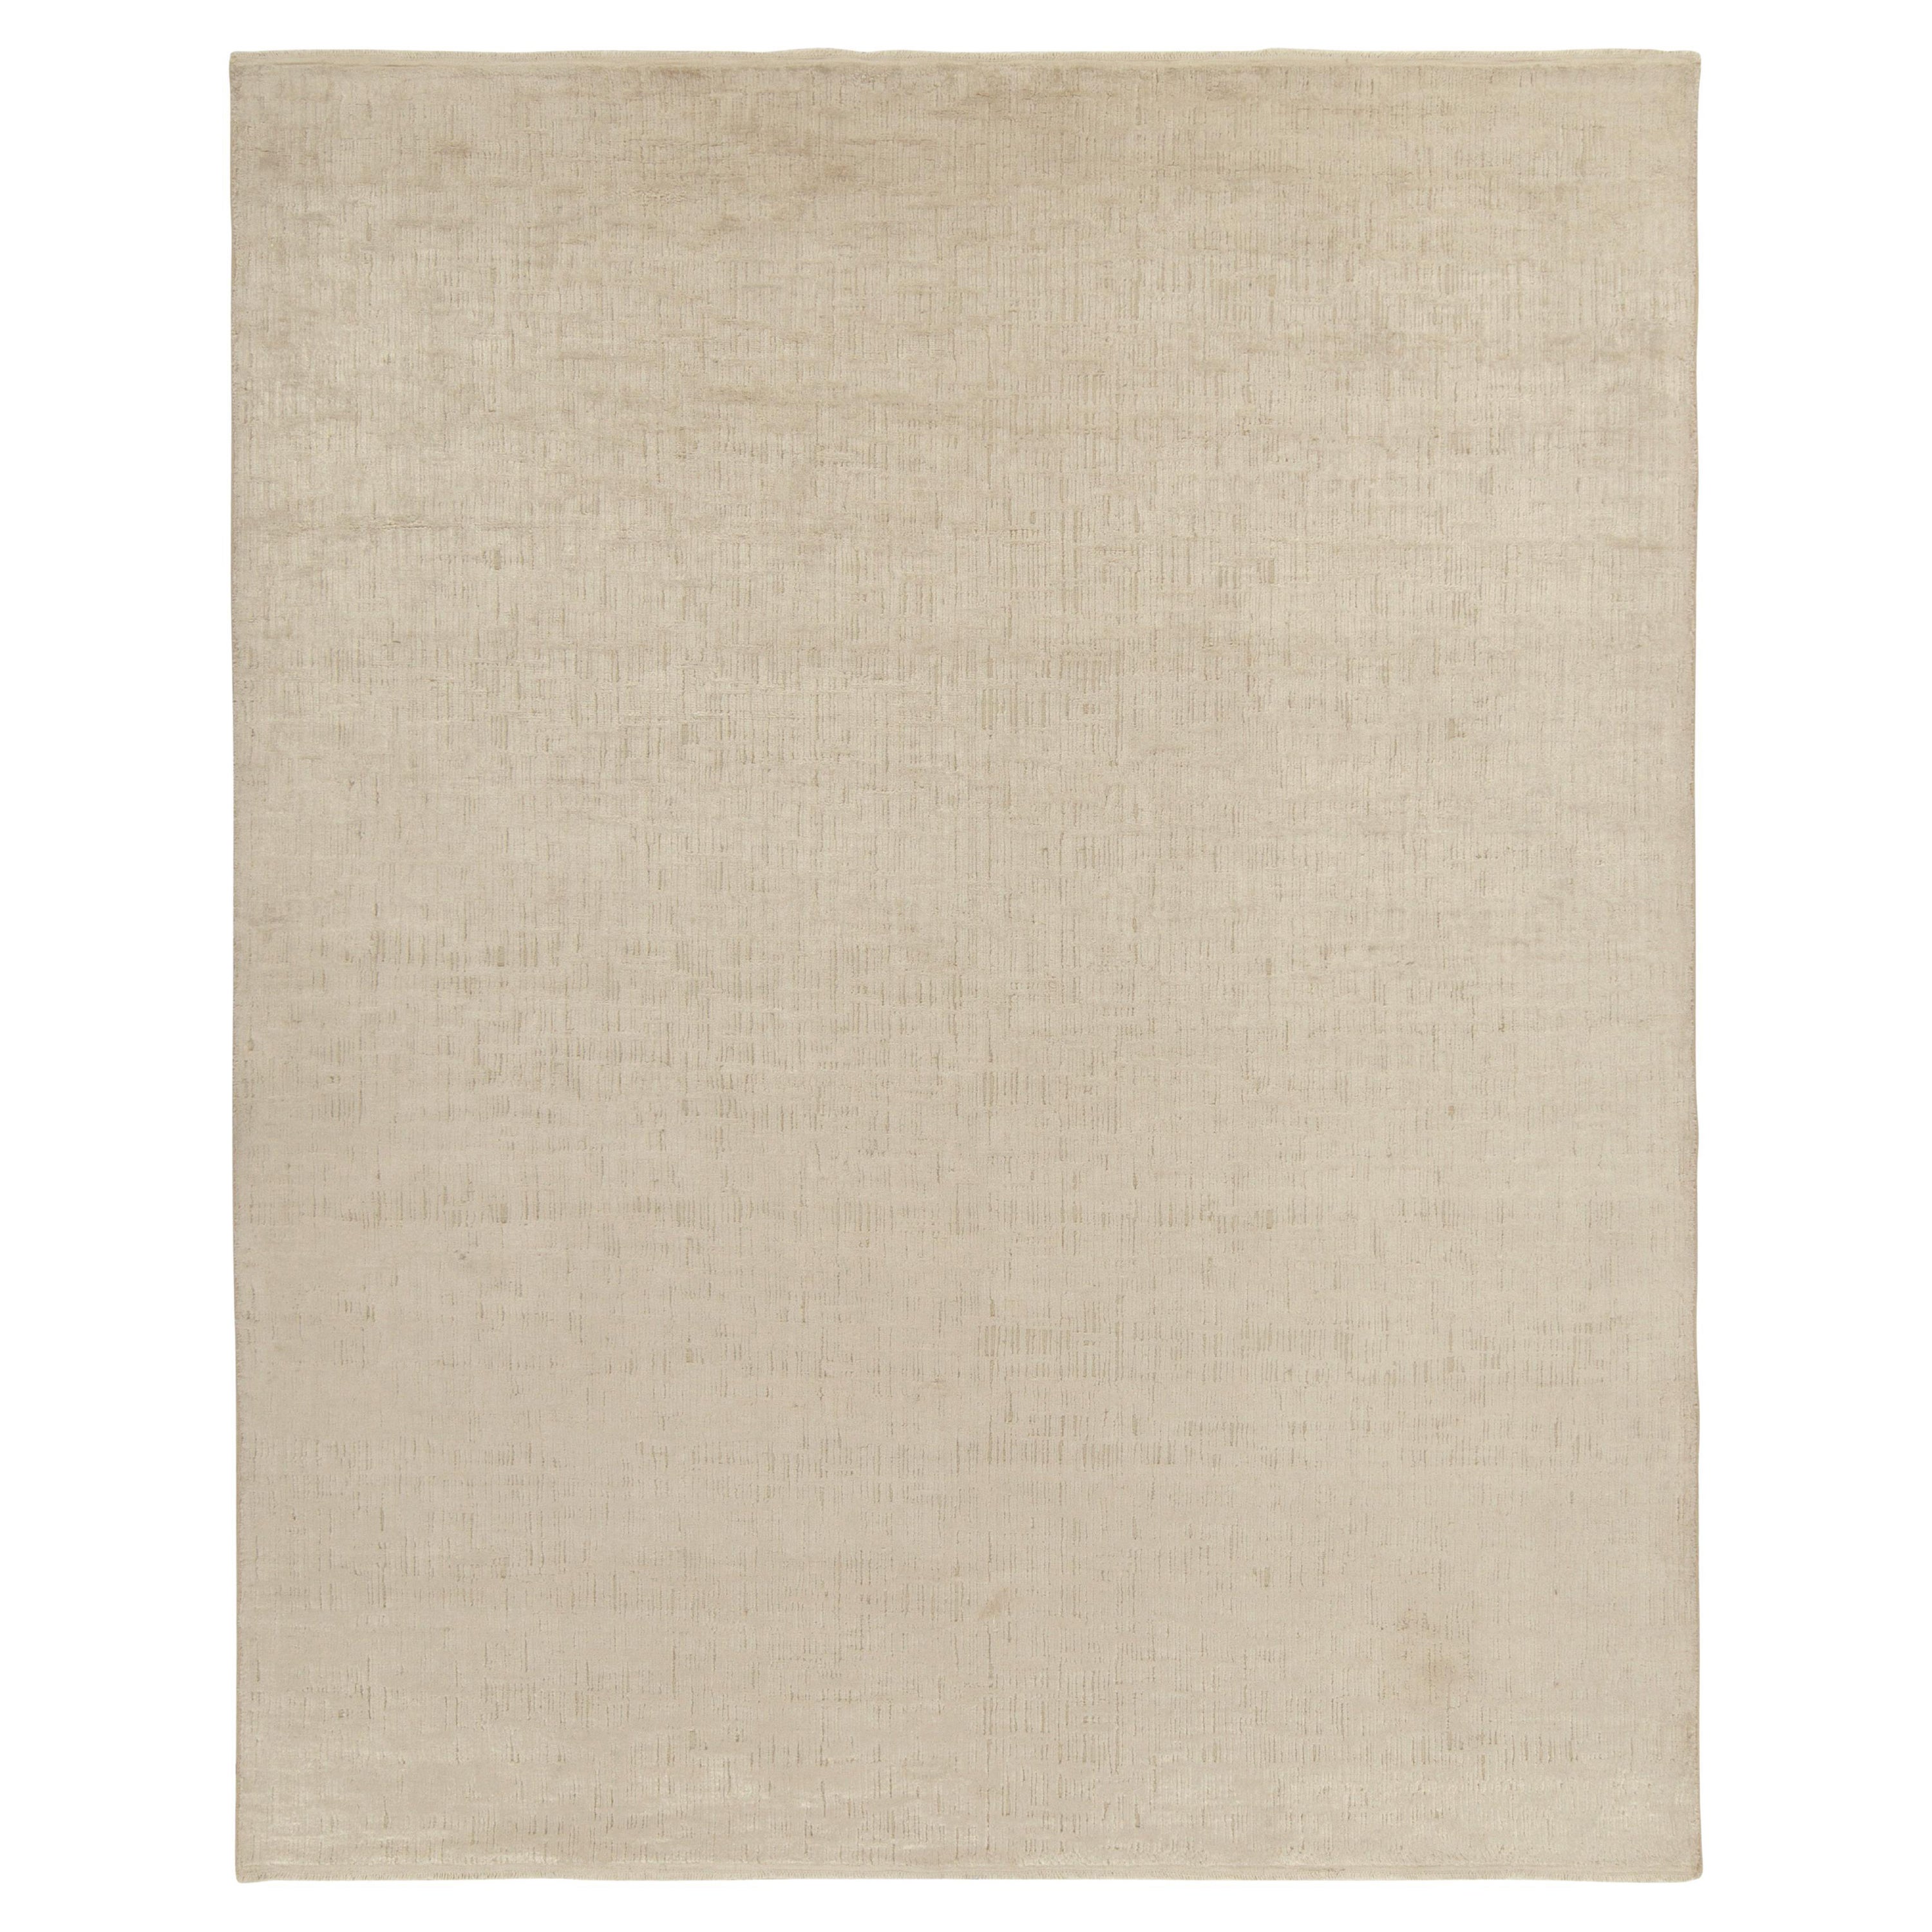 Rug & Kilim's Contemporary Rug in Beige and Off-White, Reversible (tapis contemporain en beige et blanc cassé)